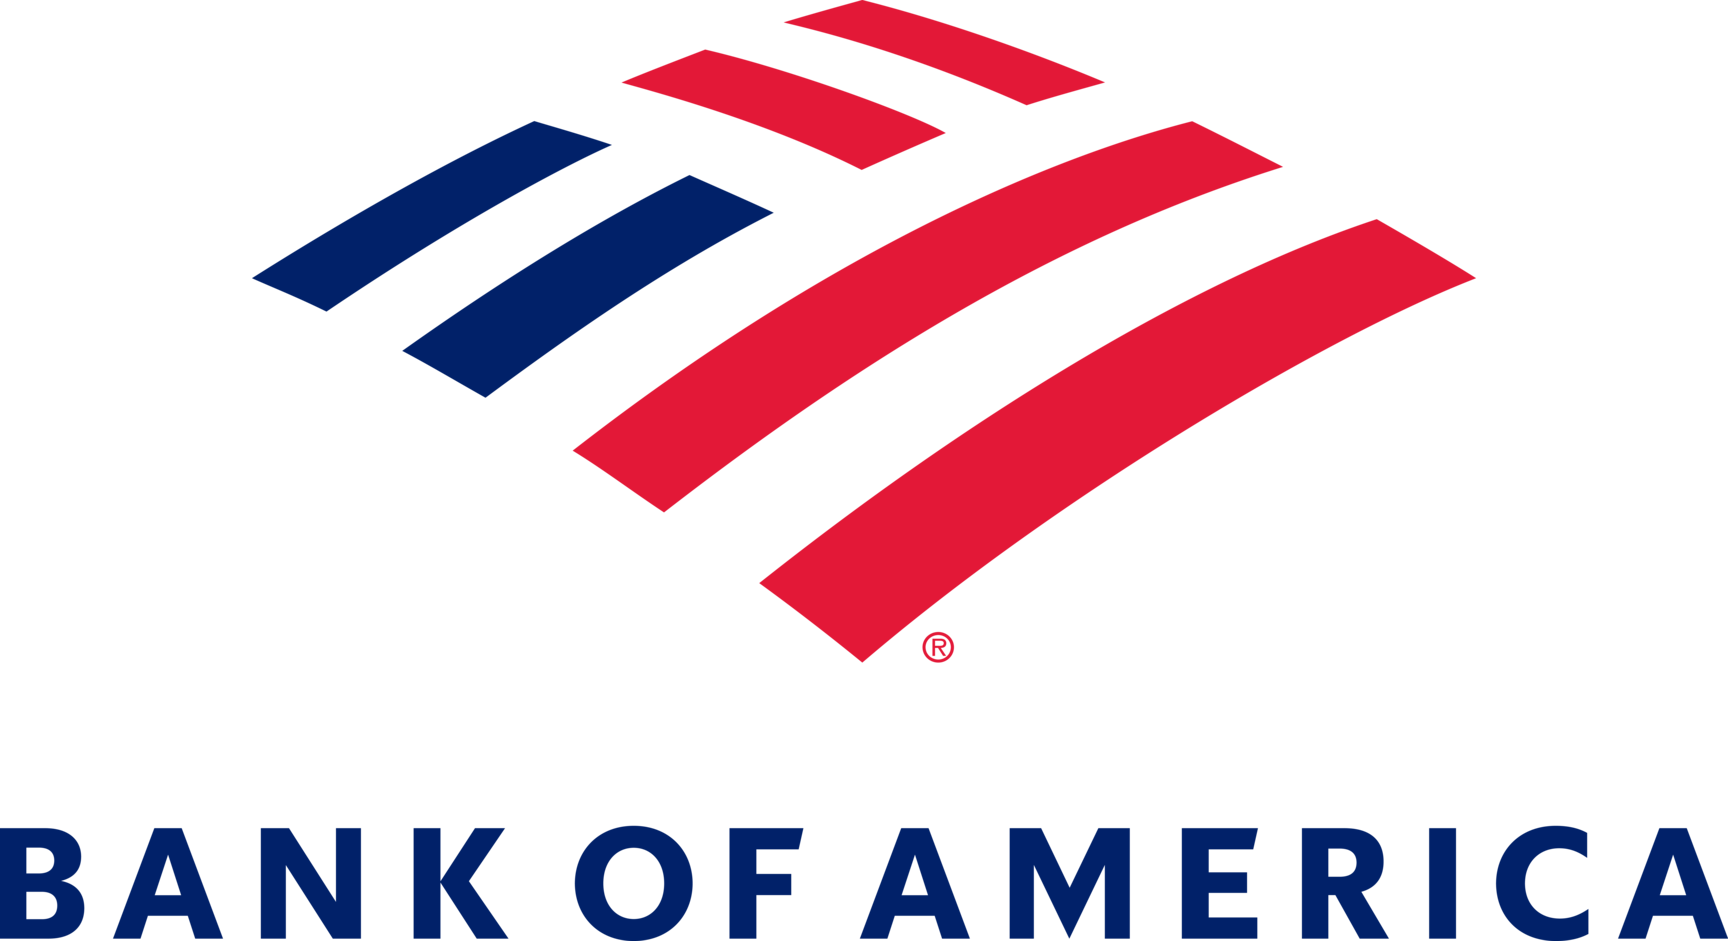 3.1 - Bank of America